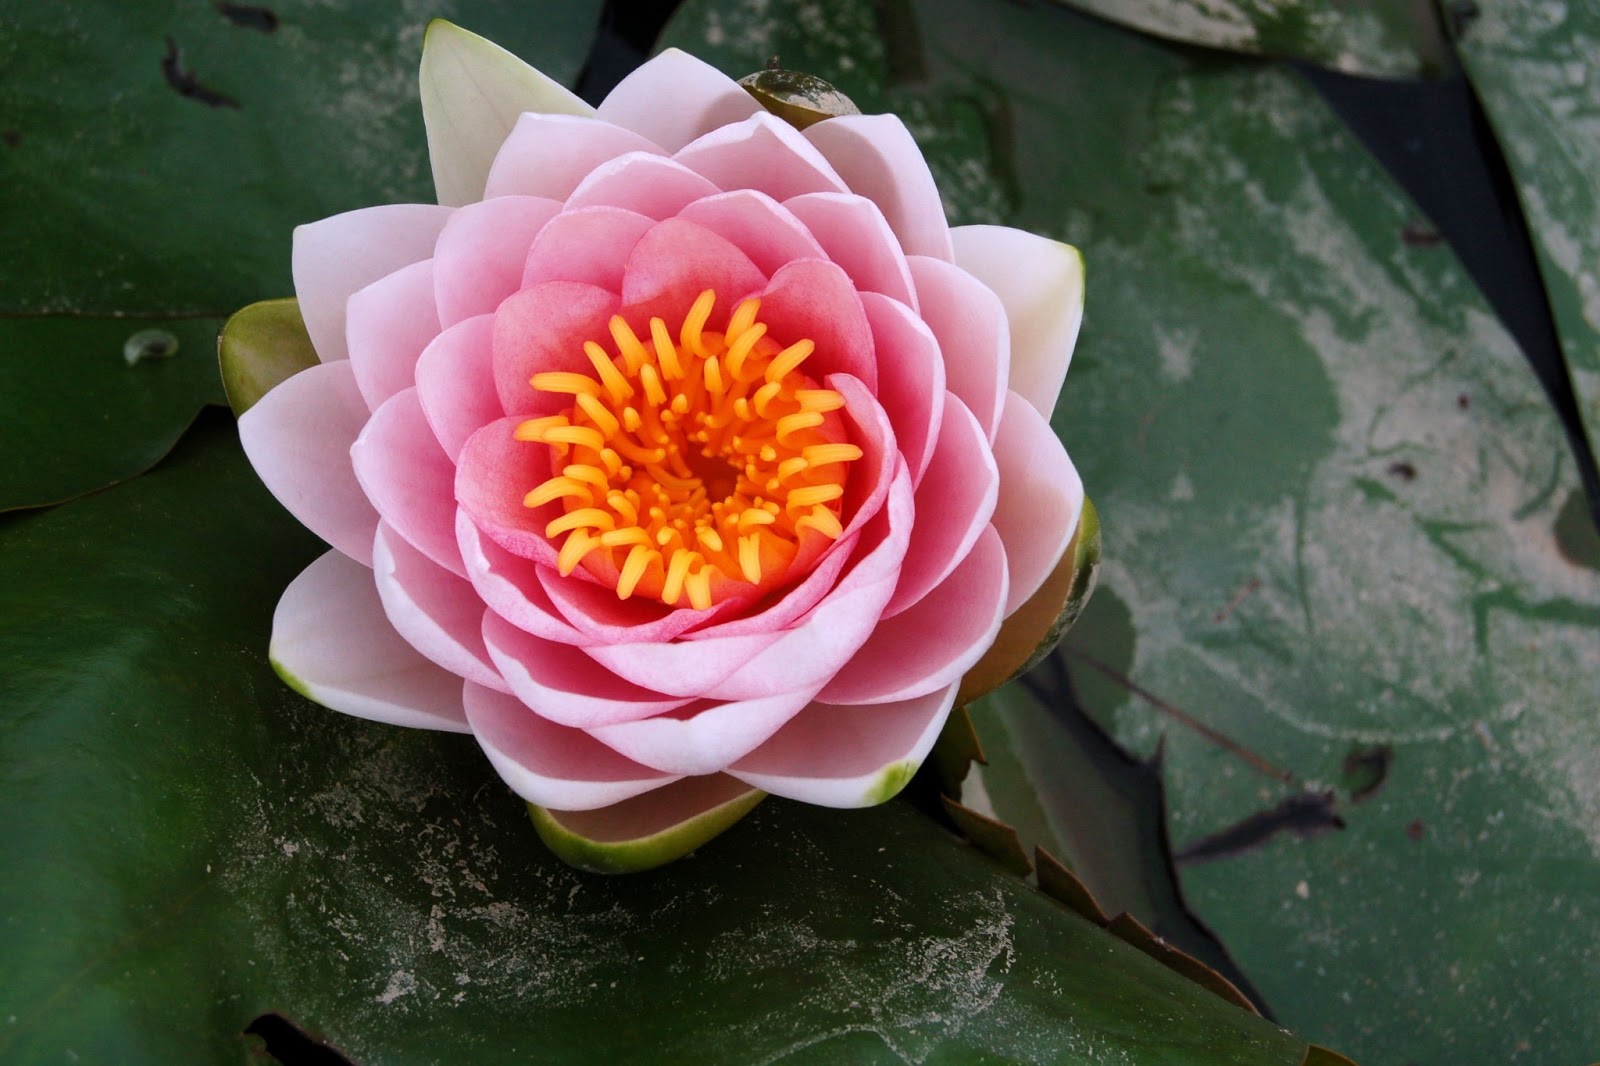 Lotus Flower HD Wallpaper High Definition iPhone